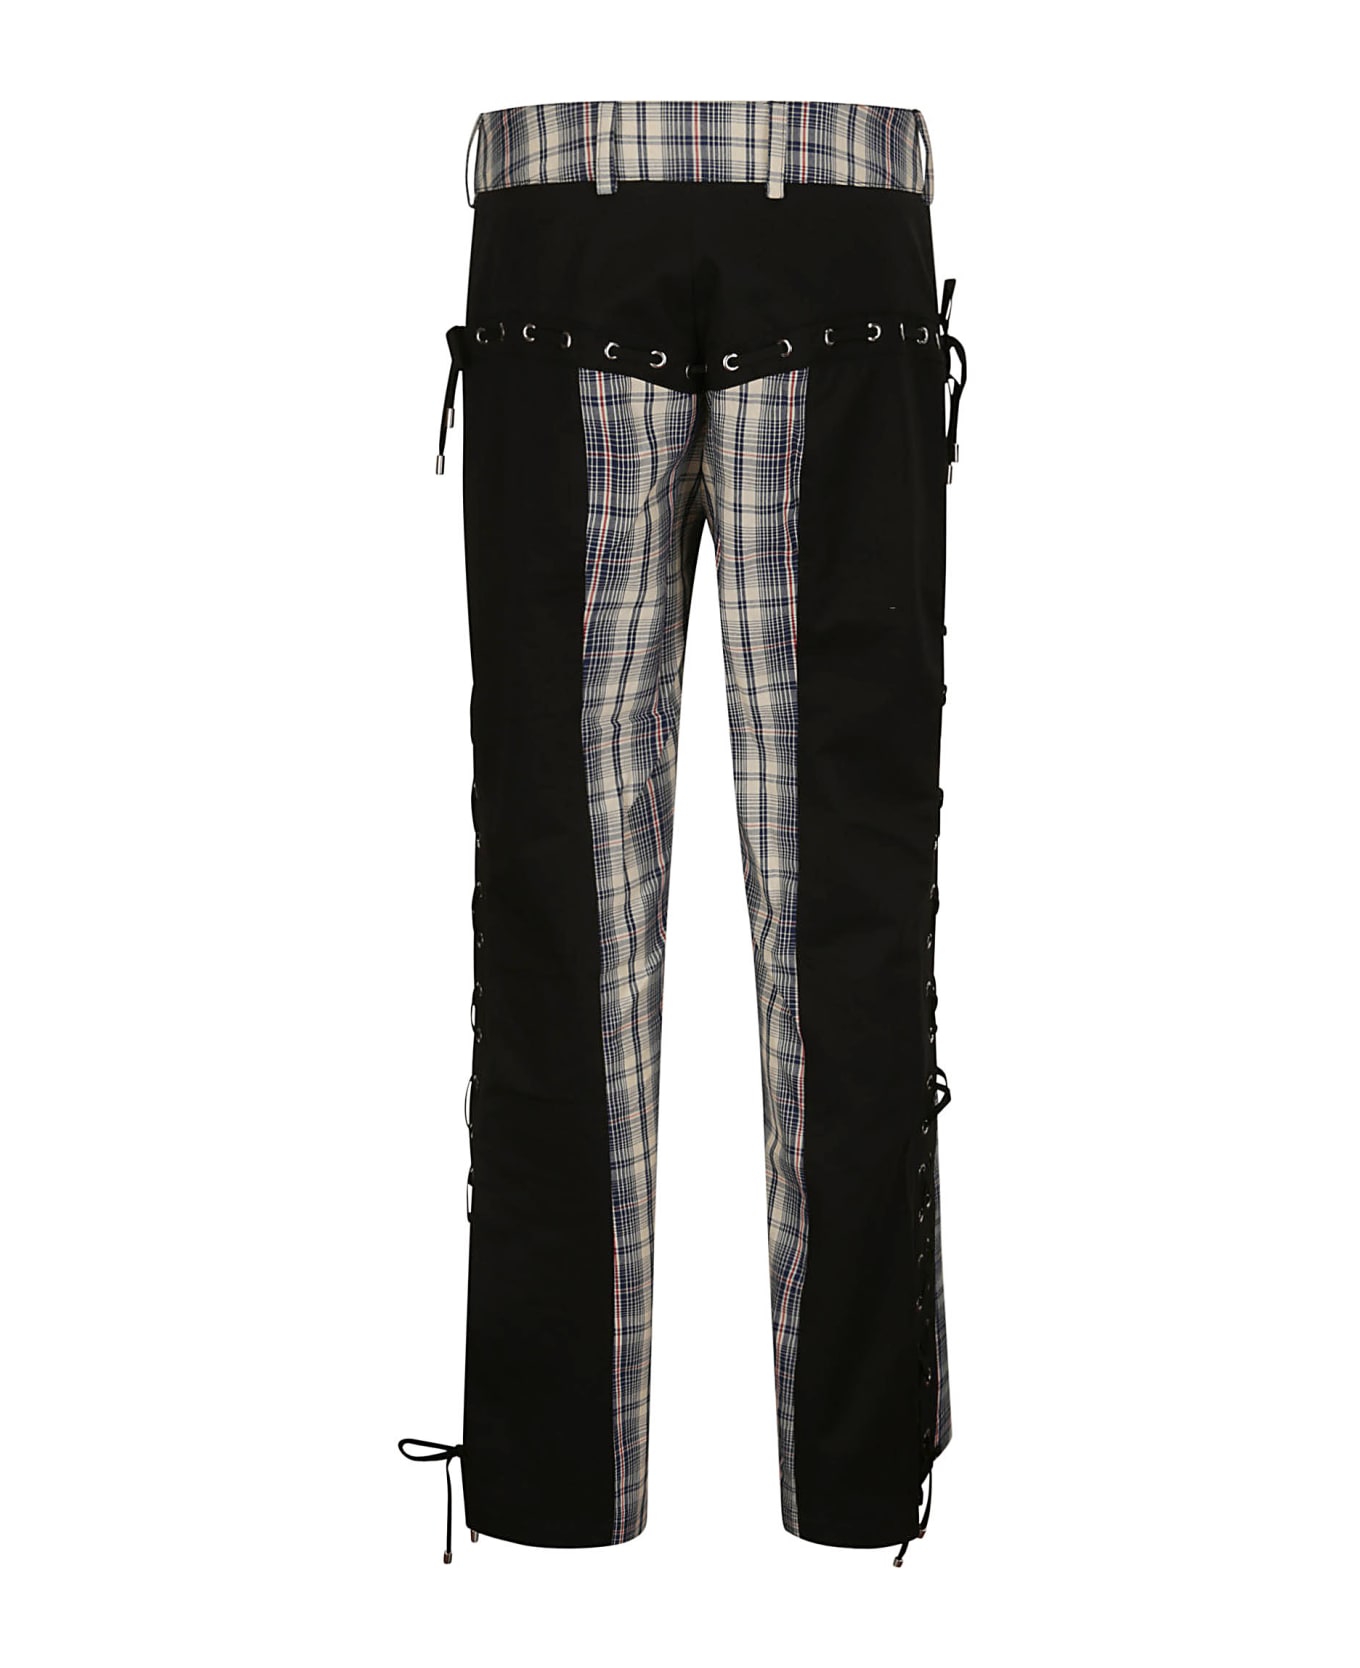 Chopova Lowena Collage Tartan Trousers - BLACK AND TARTAN